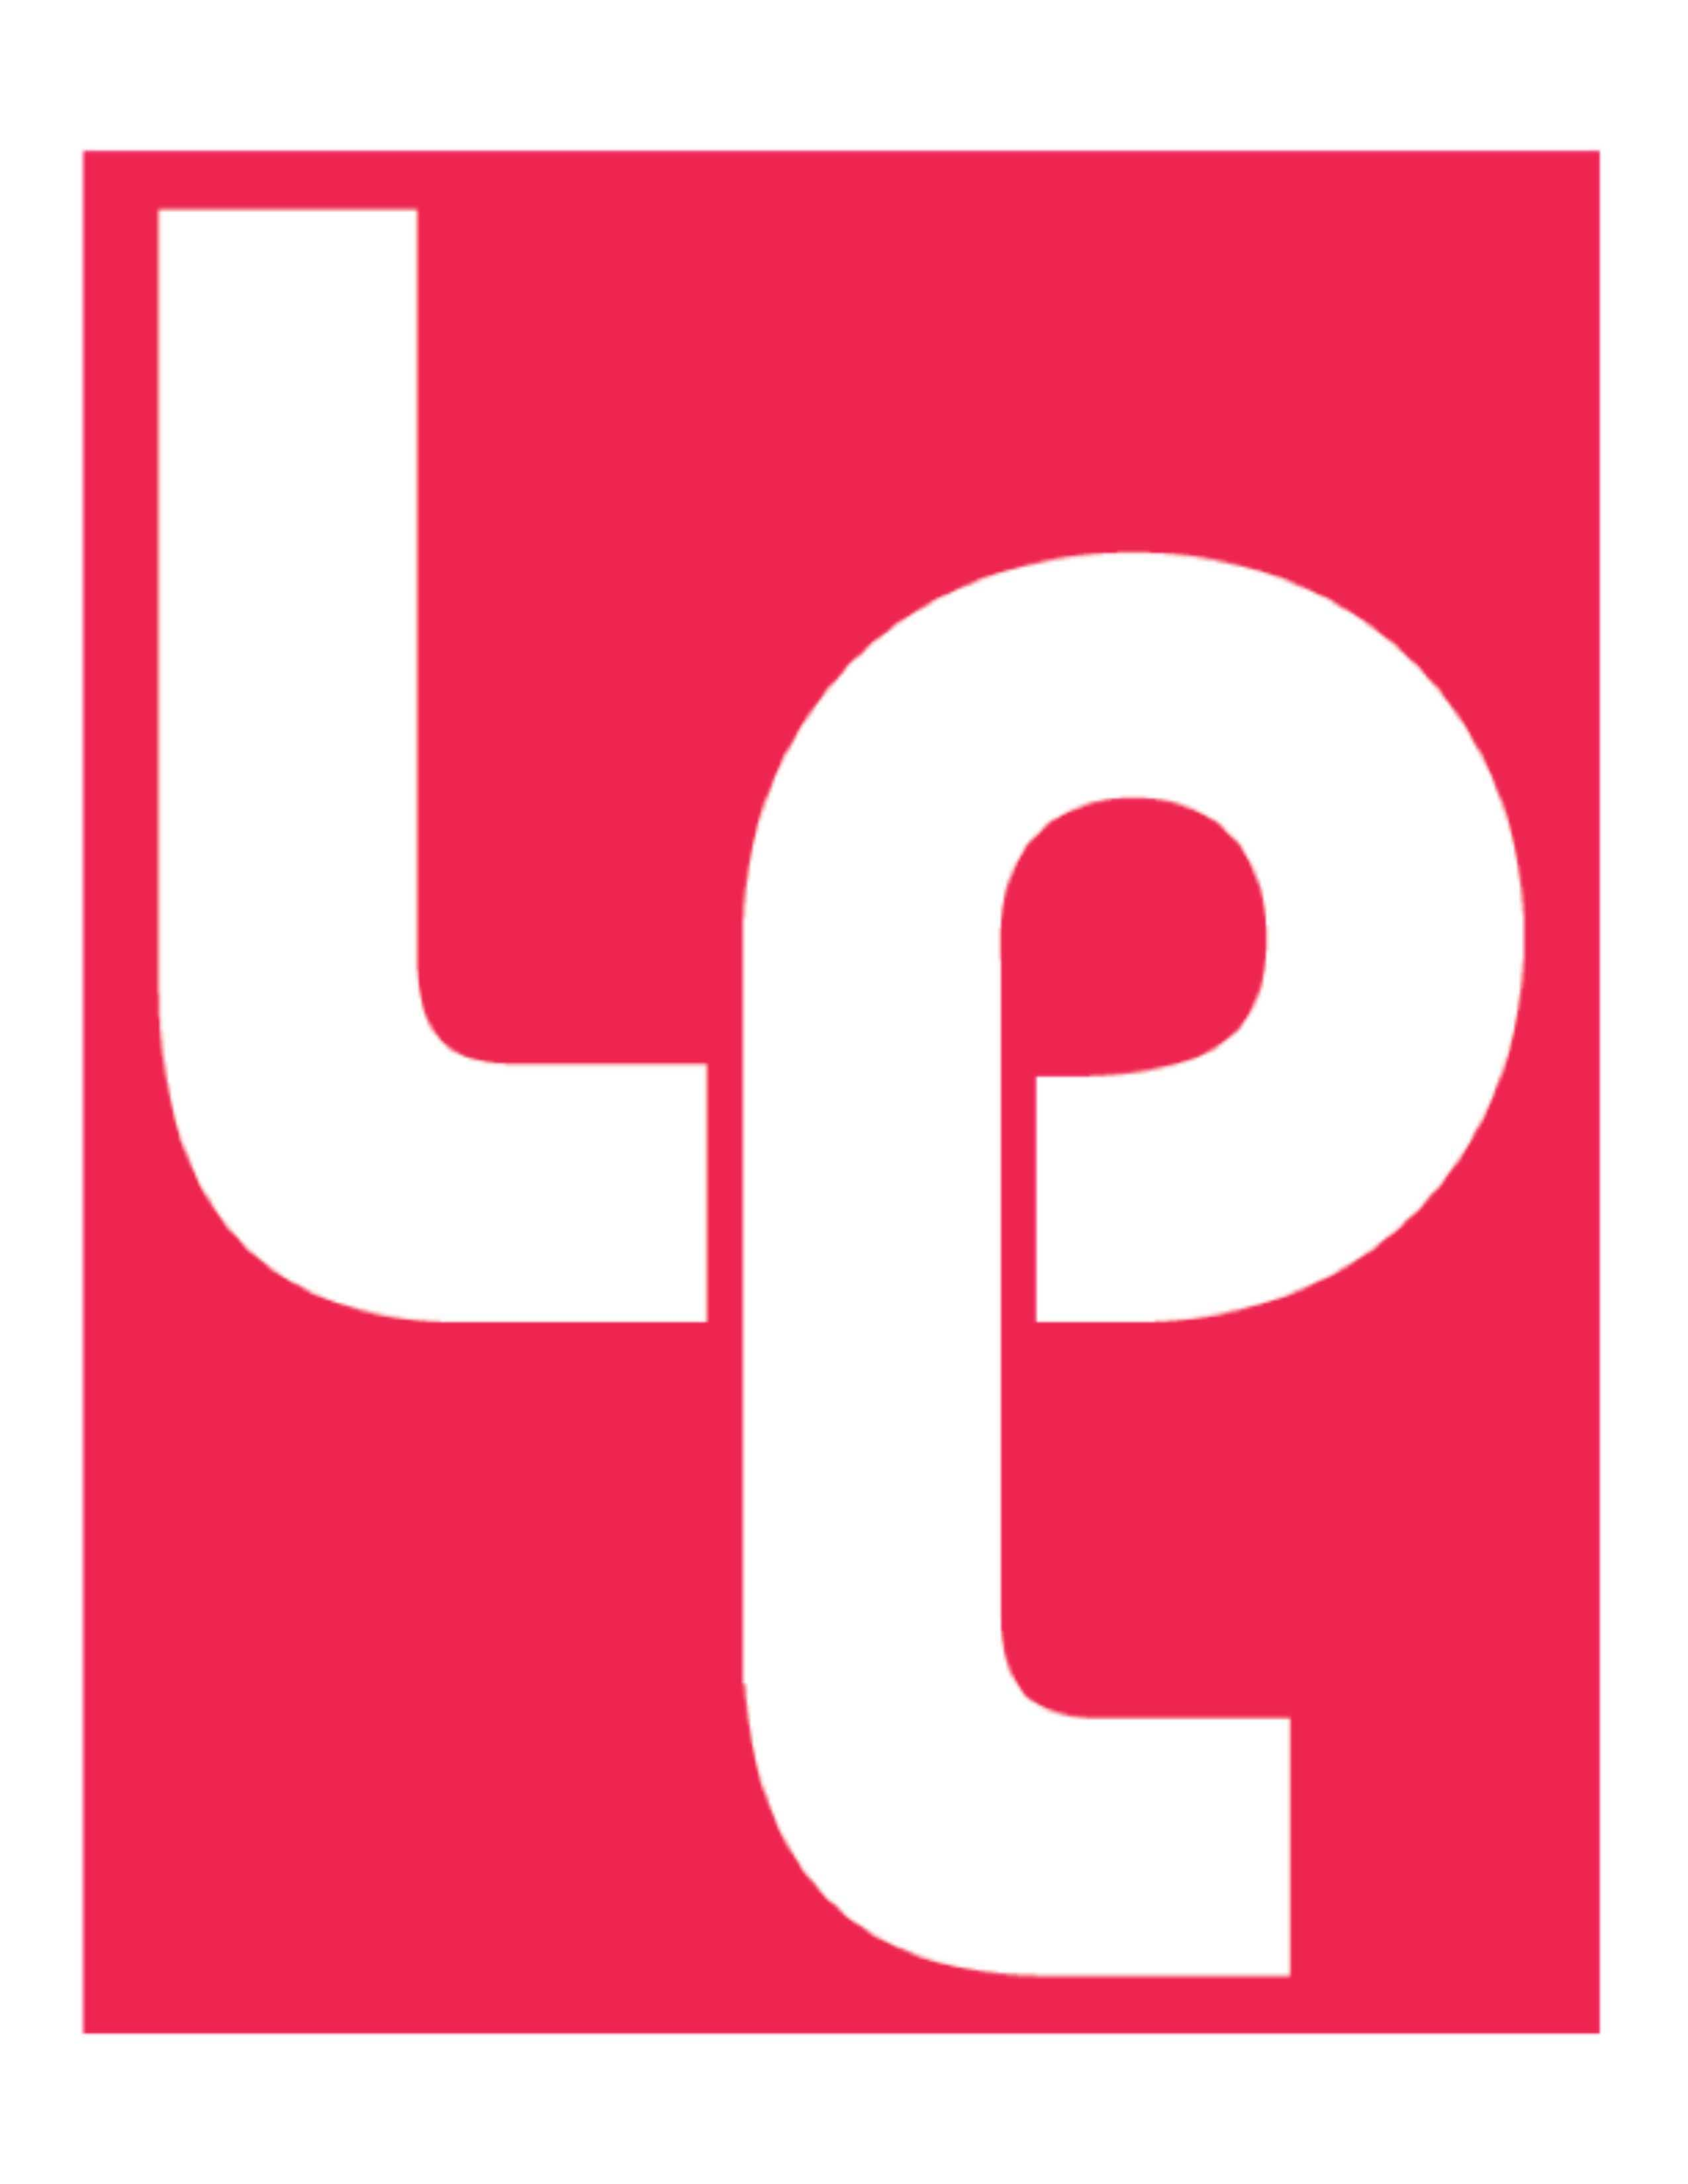 Logo Letra por Letra.png